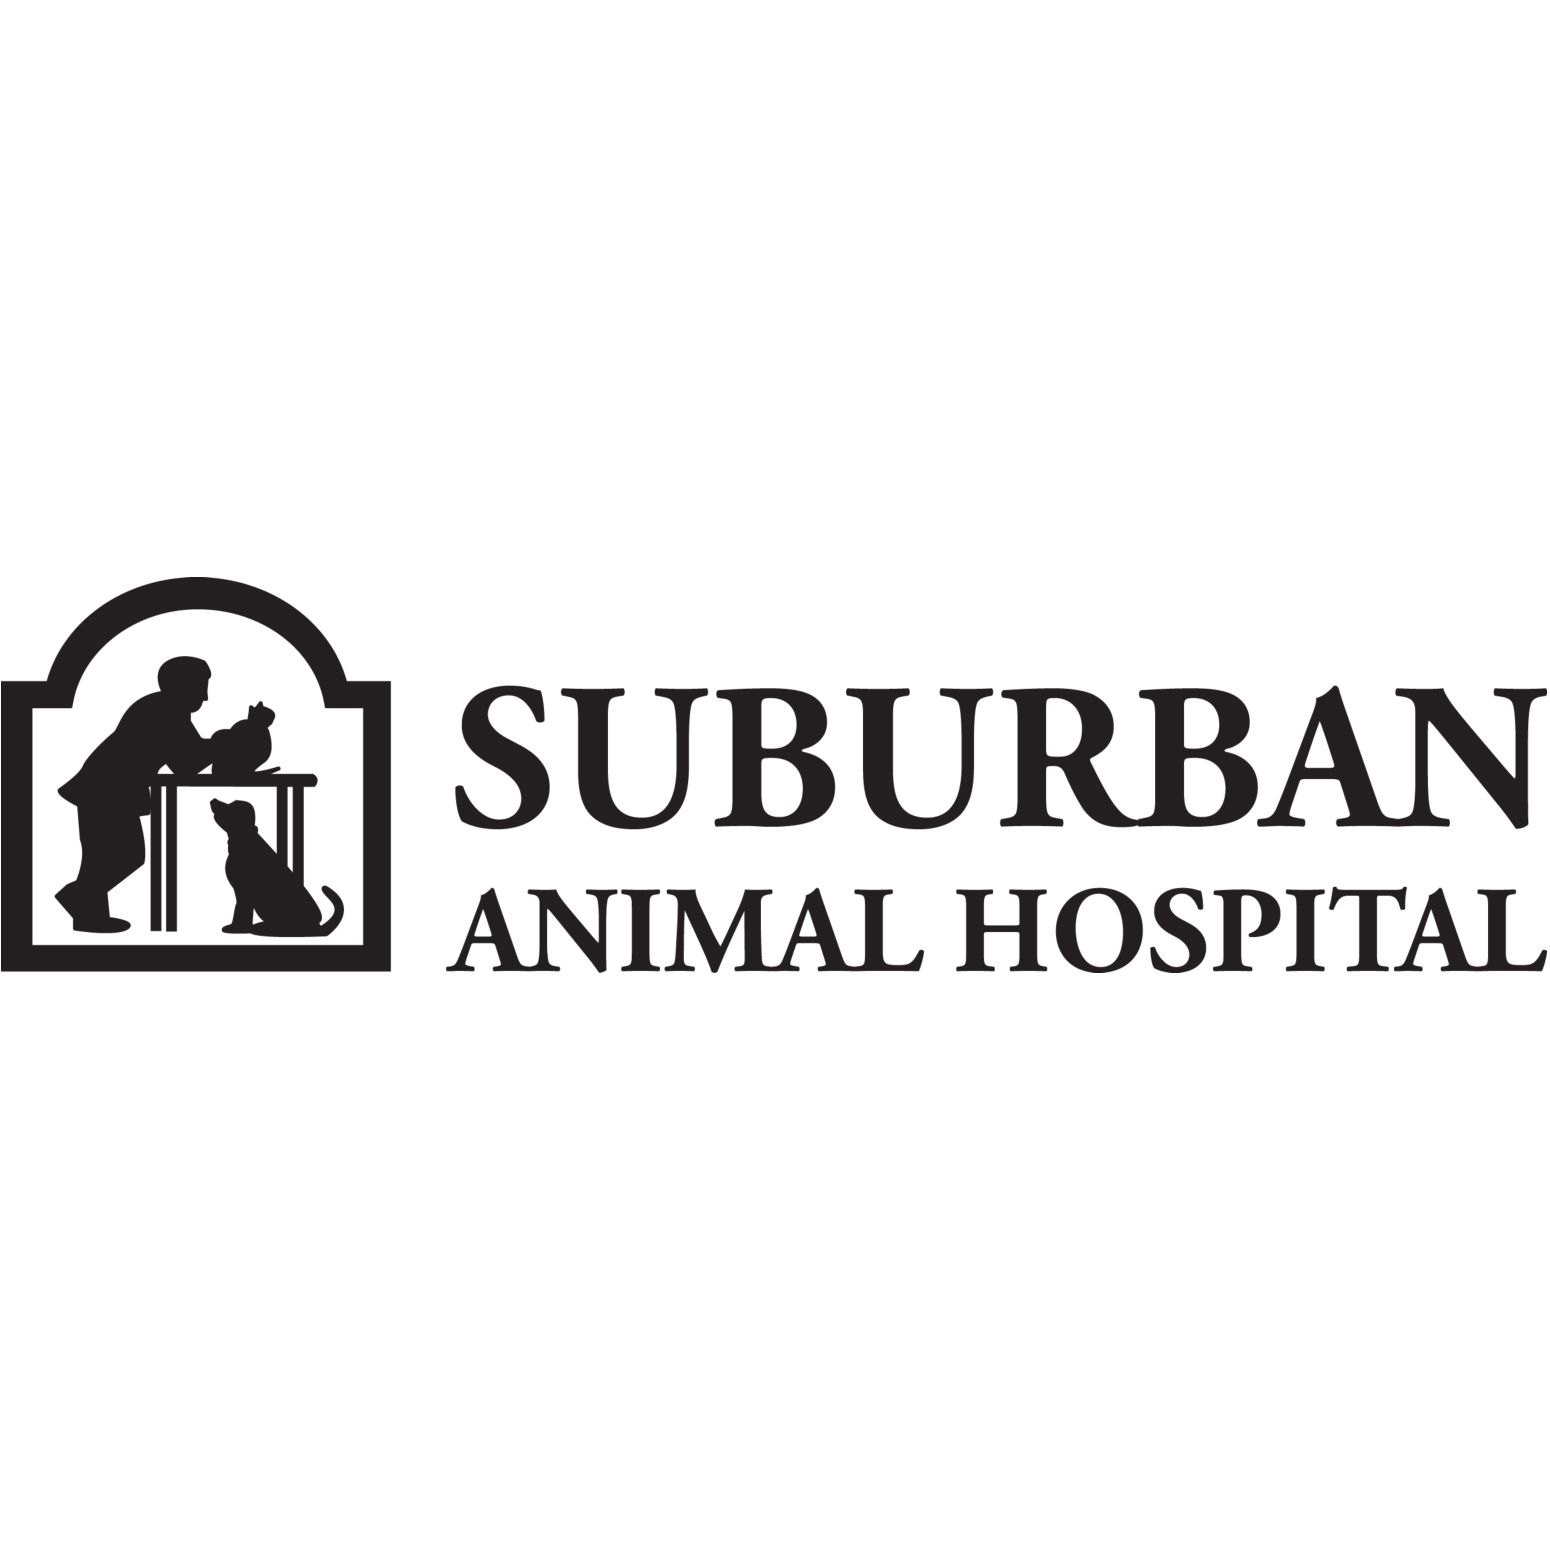 Suburban Animal Hospital